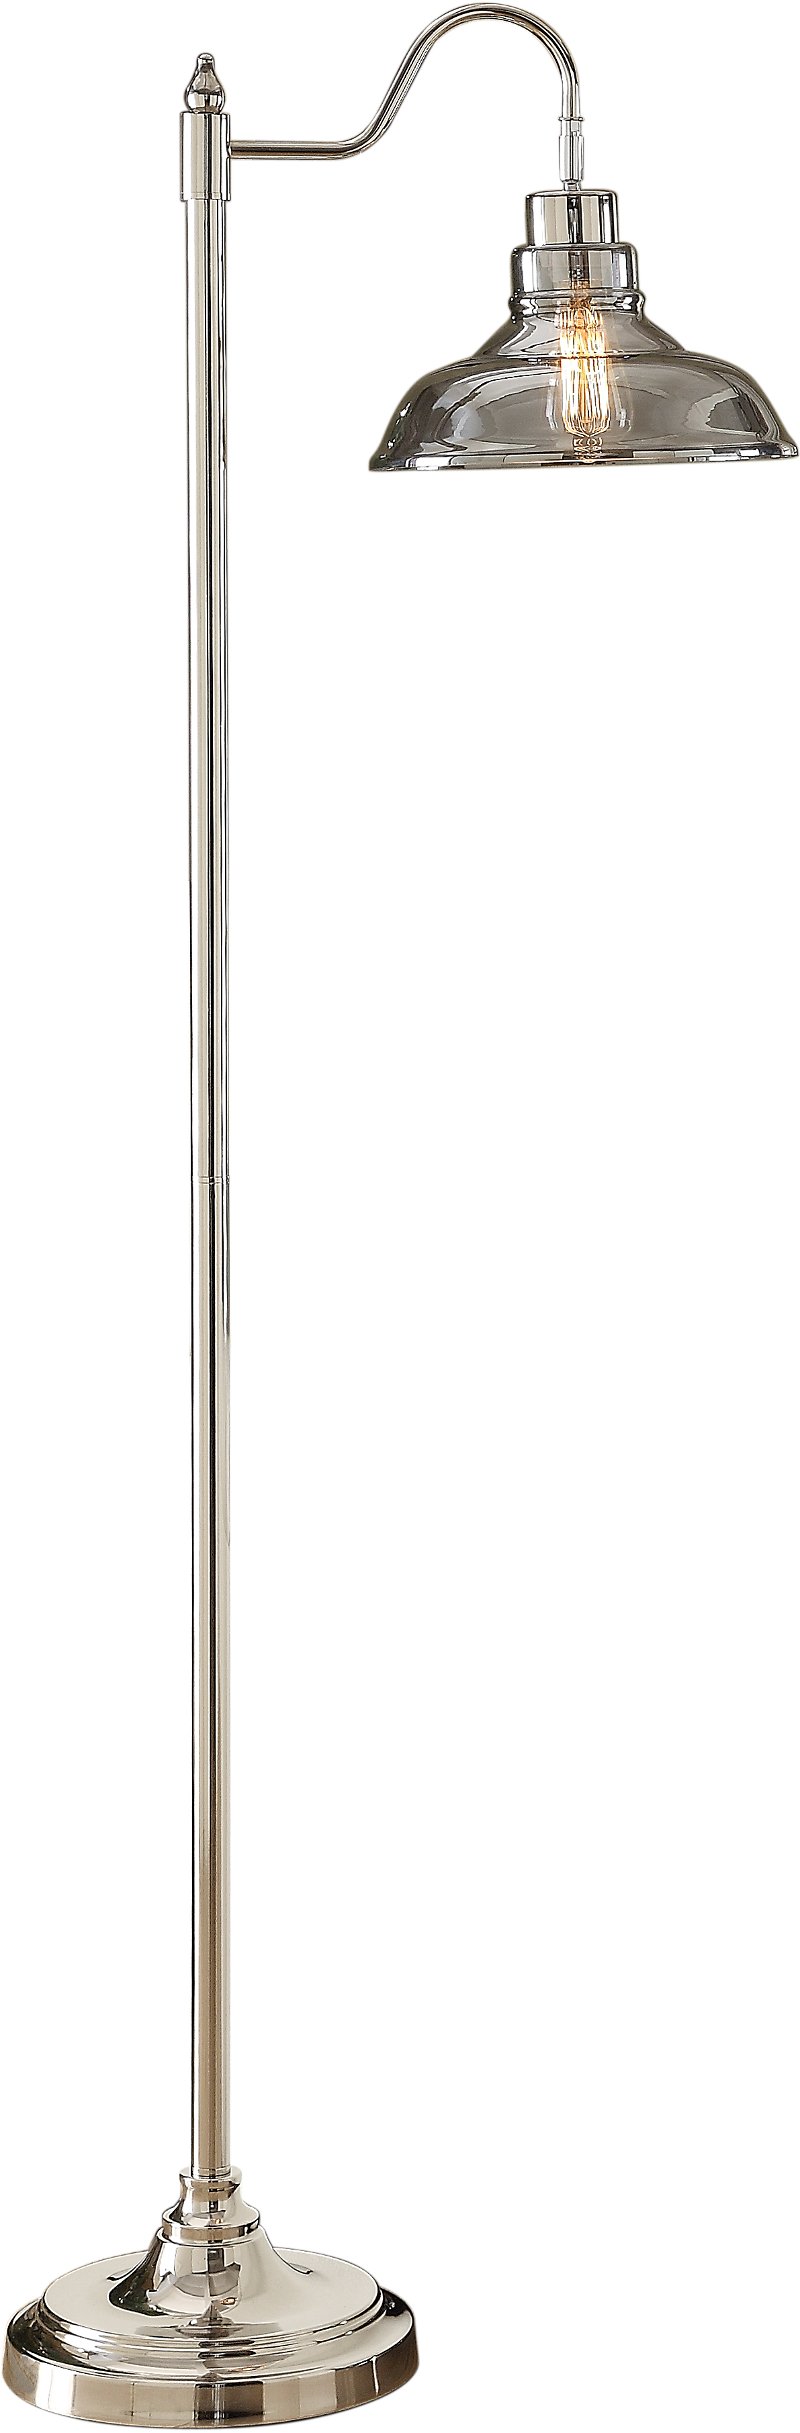 Nickel Floor Lamp With Smoke Glass, Arc Floor Lamp Glass Shade